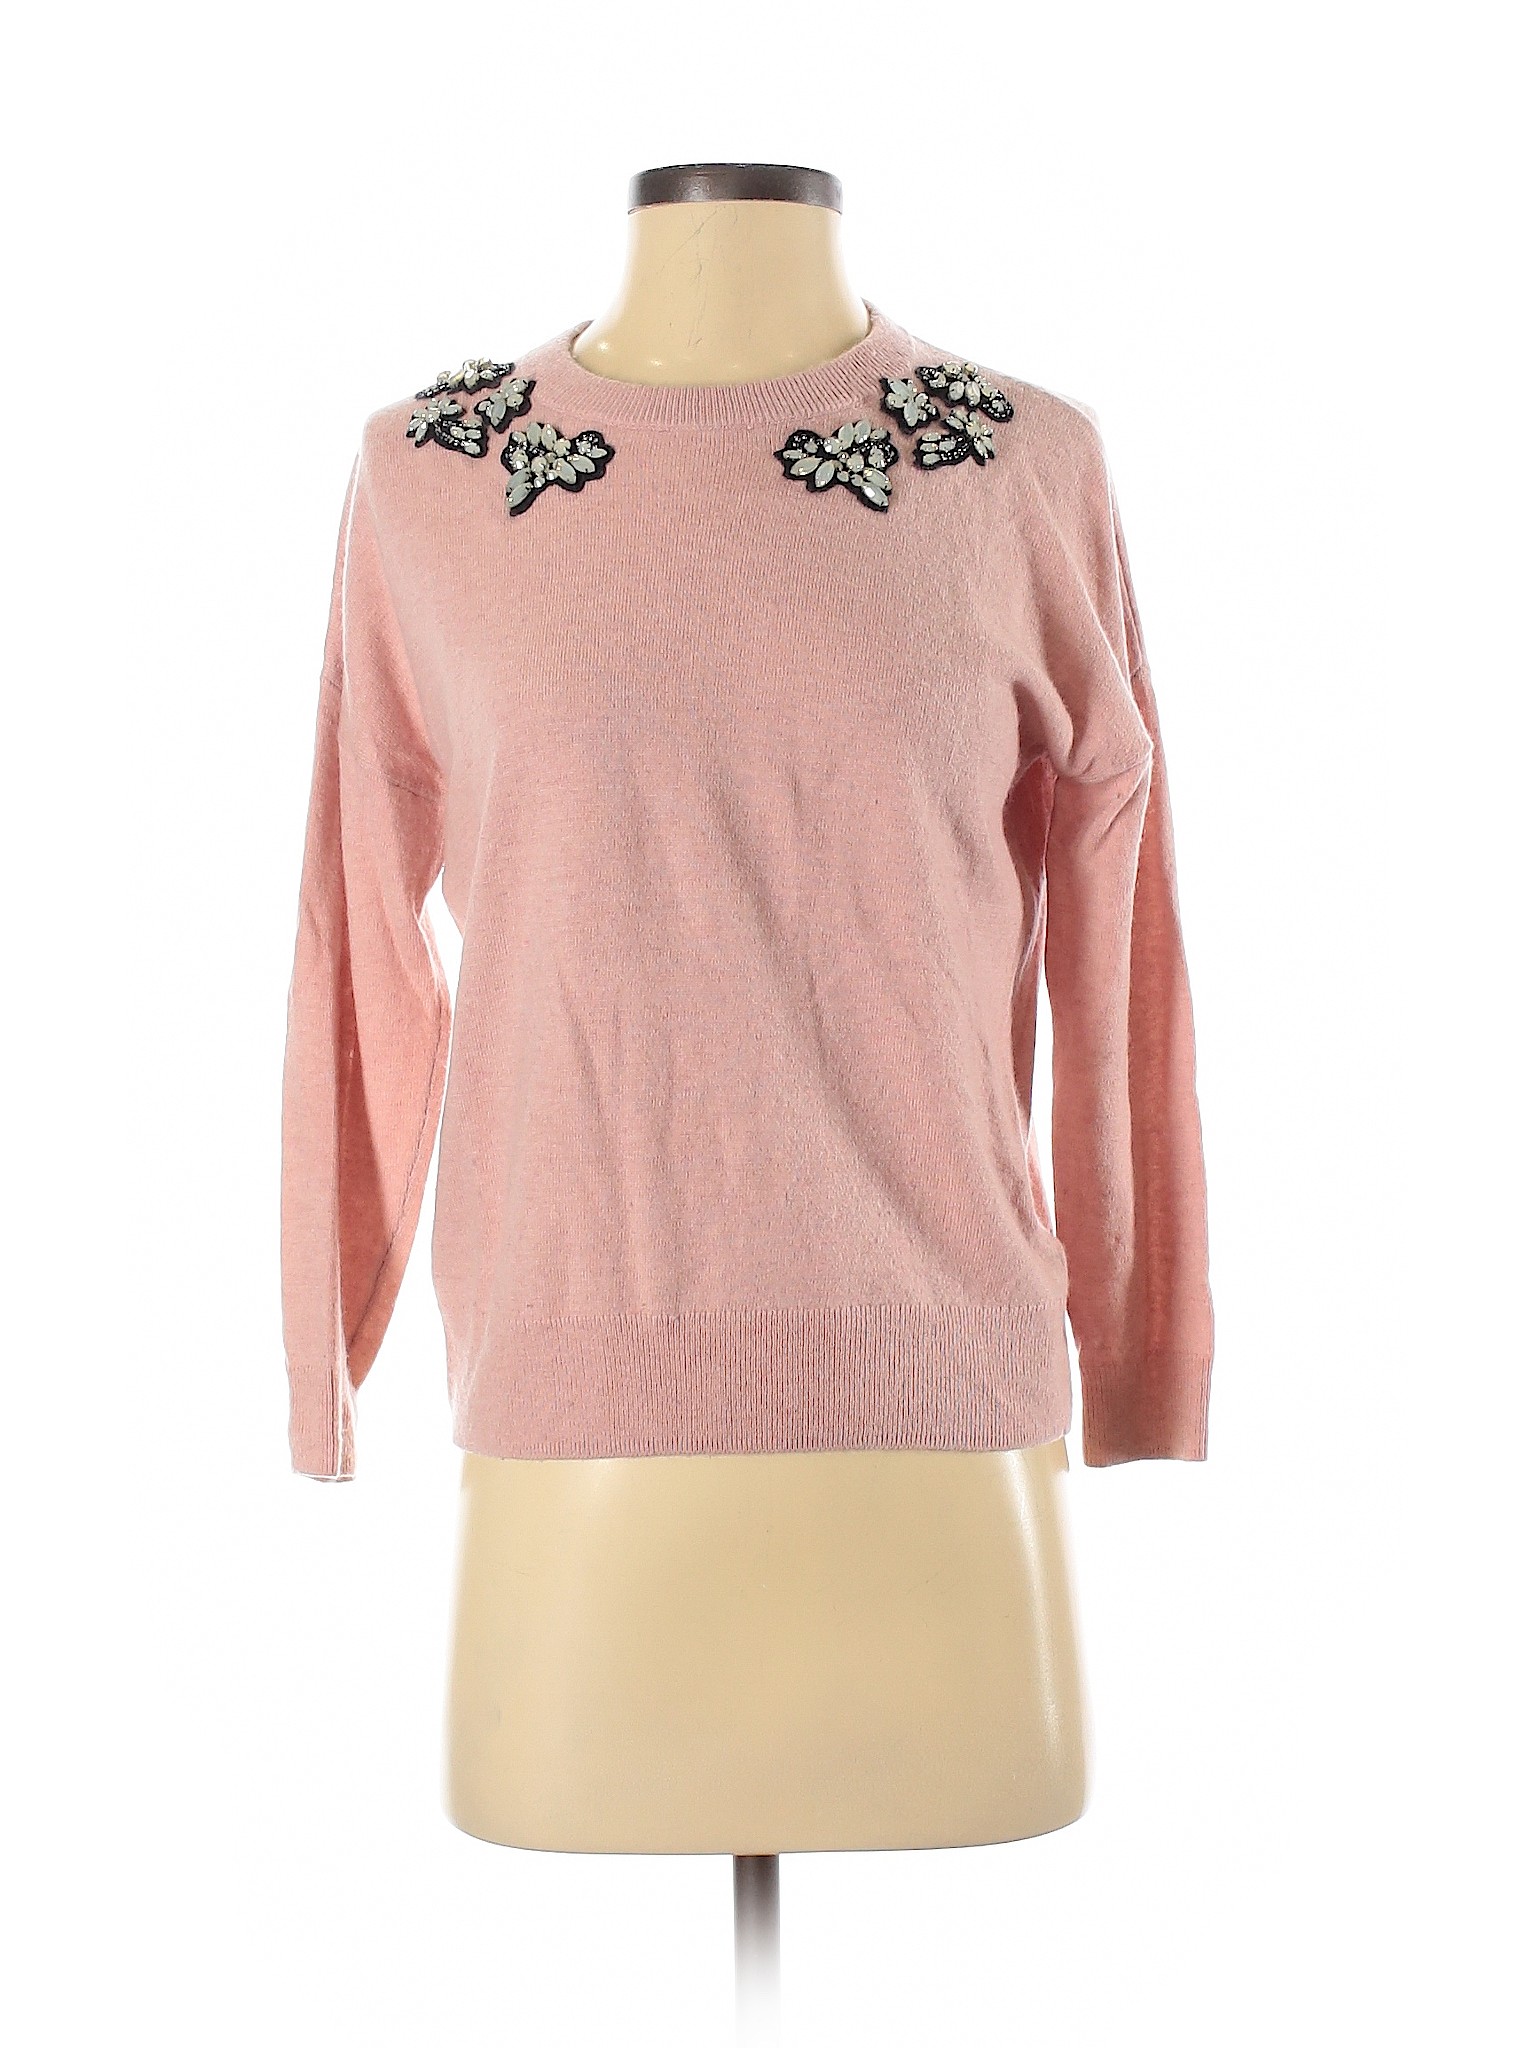 J.Crew Women Pink Pullover Sweater XS | eBay